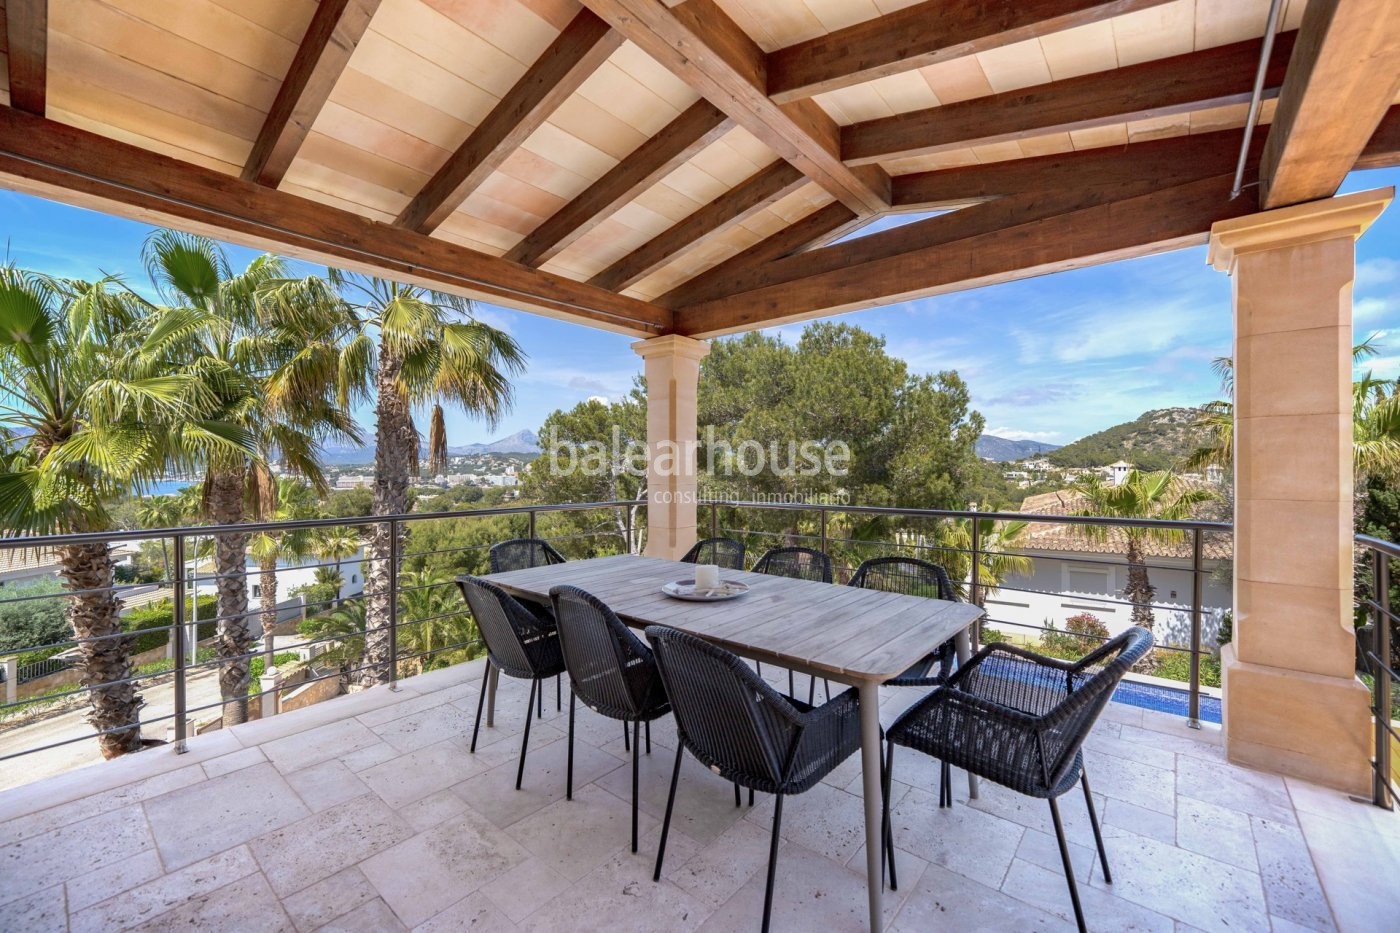 Villa with elegant, modern Mediterranean architecture in Santa Ponsa with views to the sea